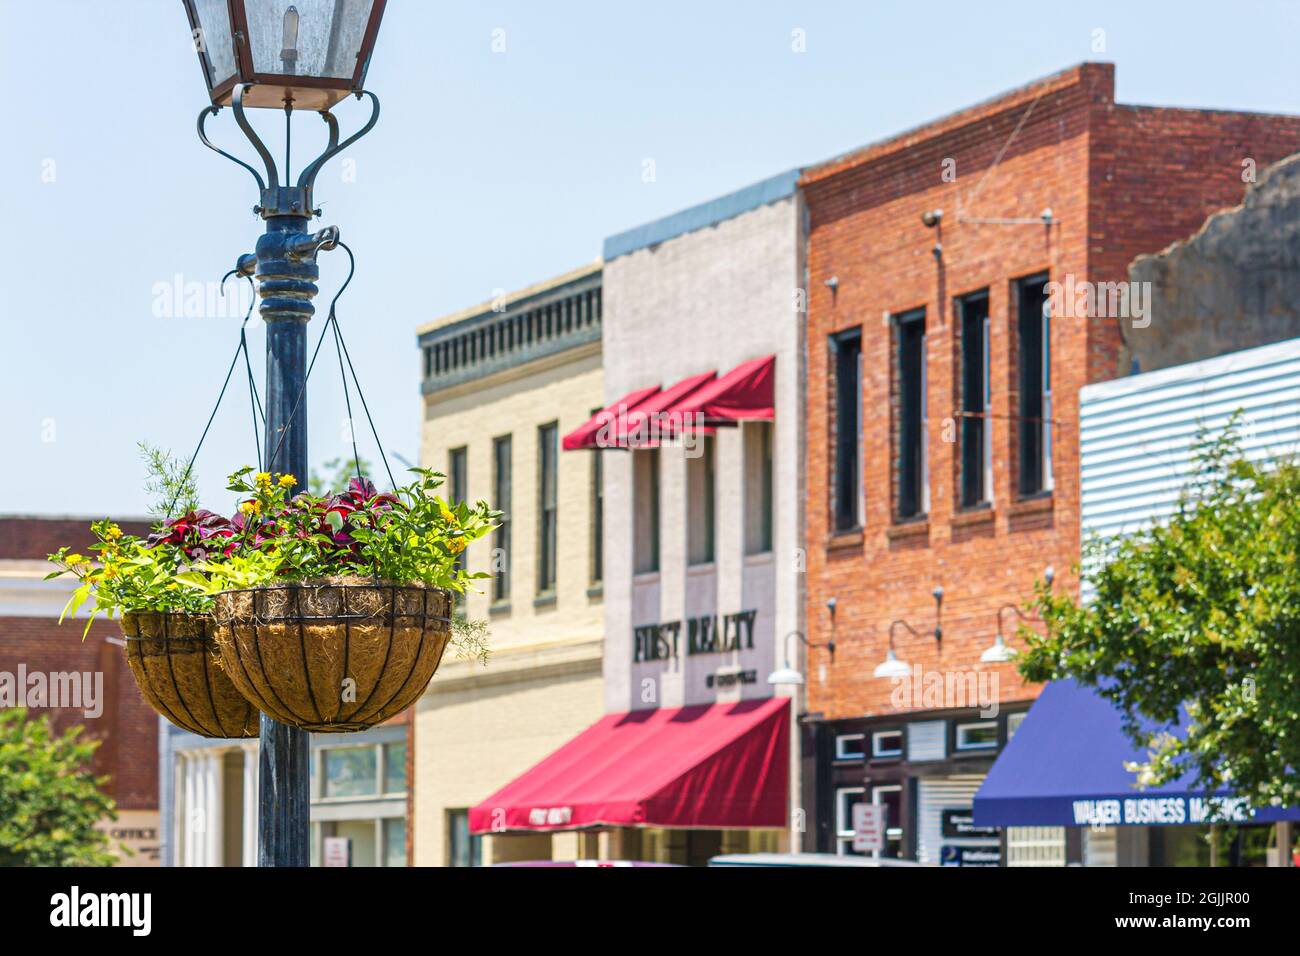 Alabama Greenville, Commerce Street historische Gebäude Lampenpost hängenden Korb Blumen Stockfoto